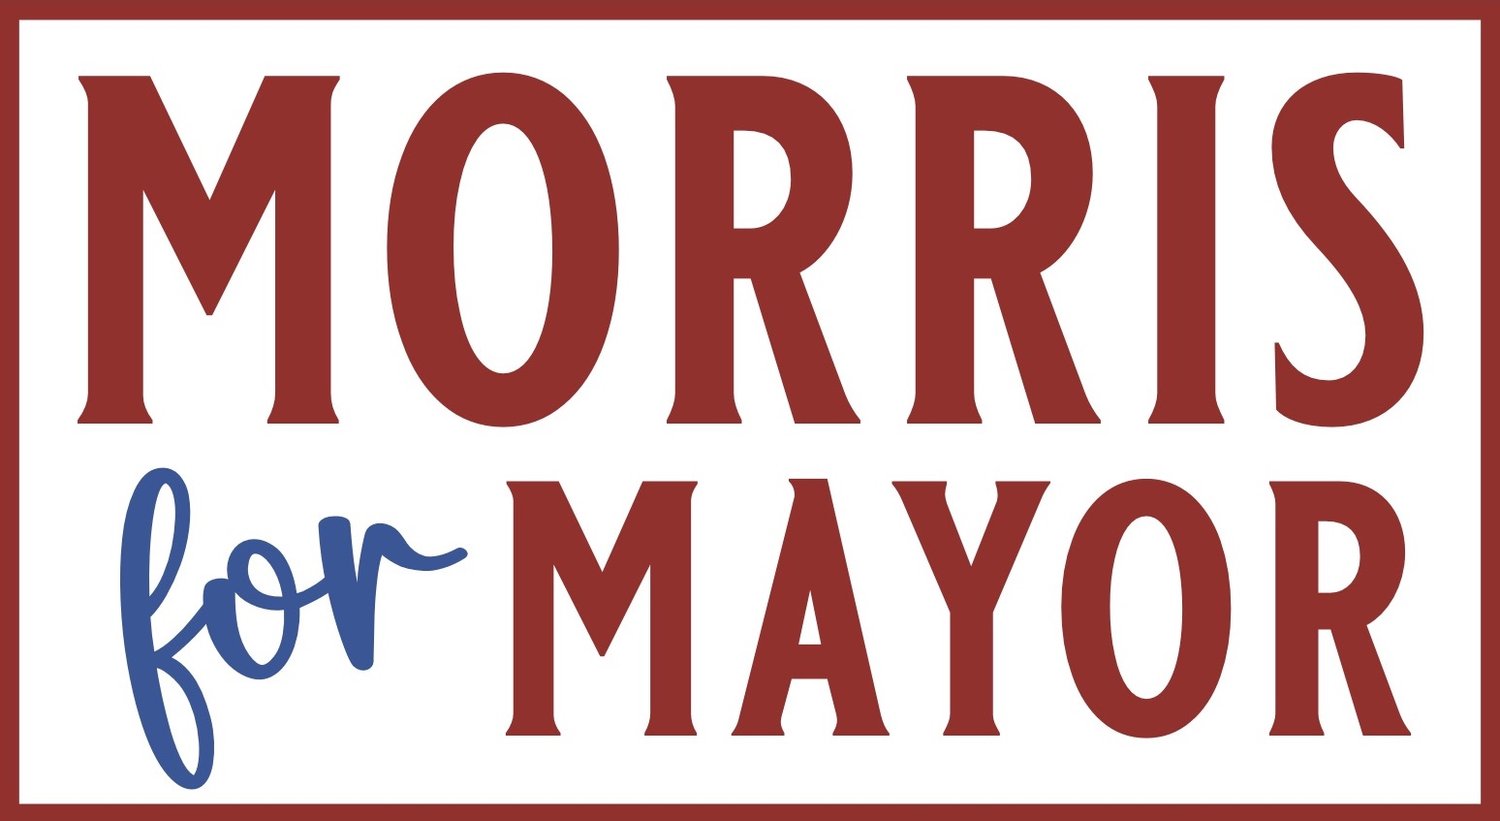 Kim Morris for Mayor